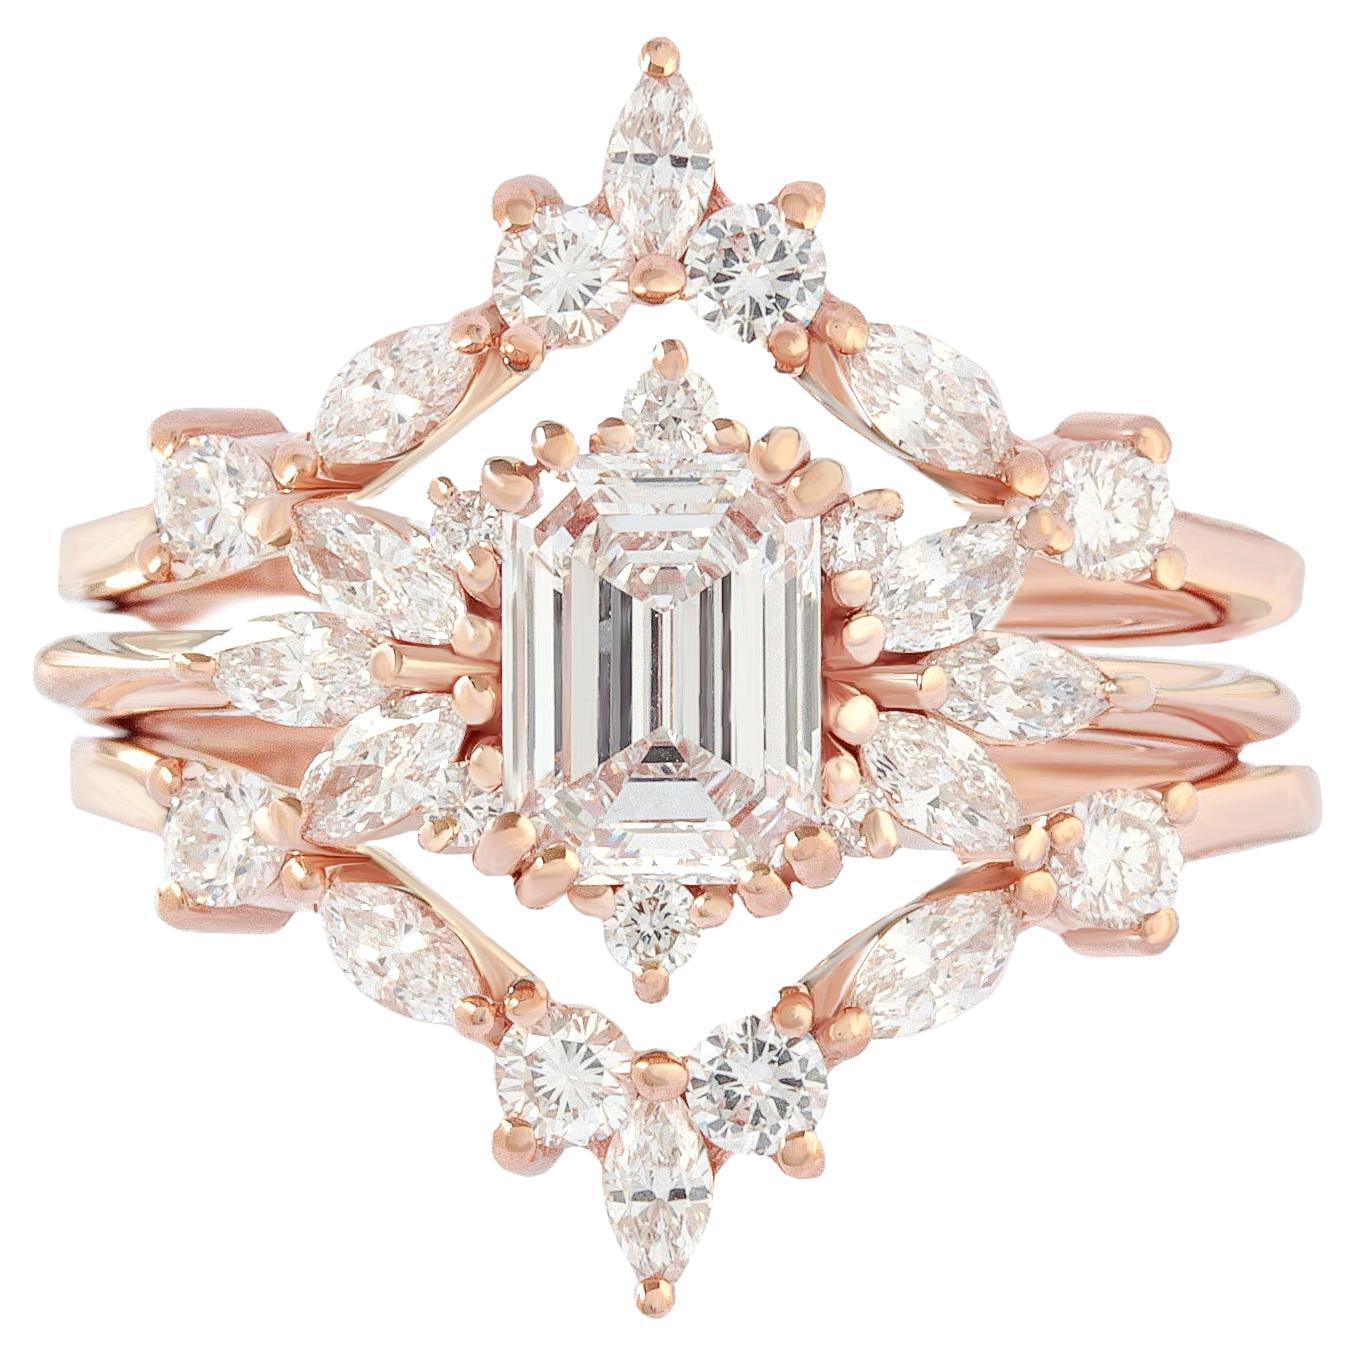 Emerald Cut Diamond Bridal Ring Set "Spark" & "Iceland" Nesting Rings For Sale